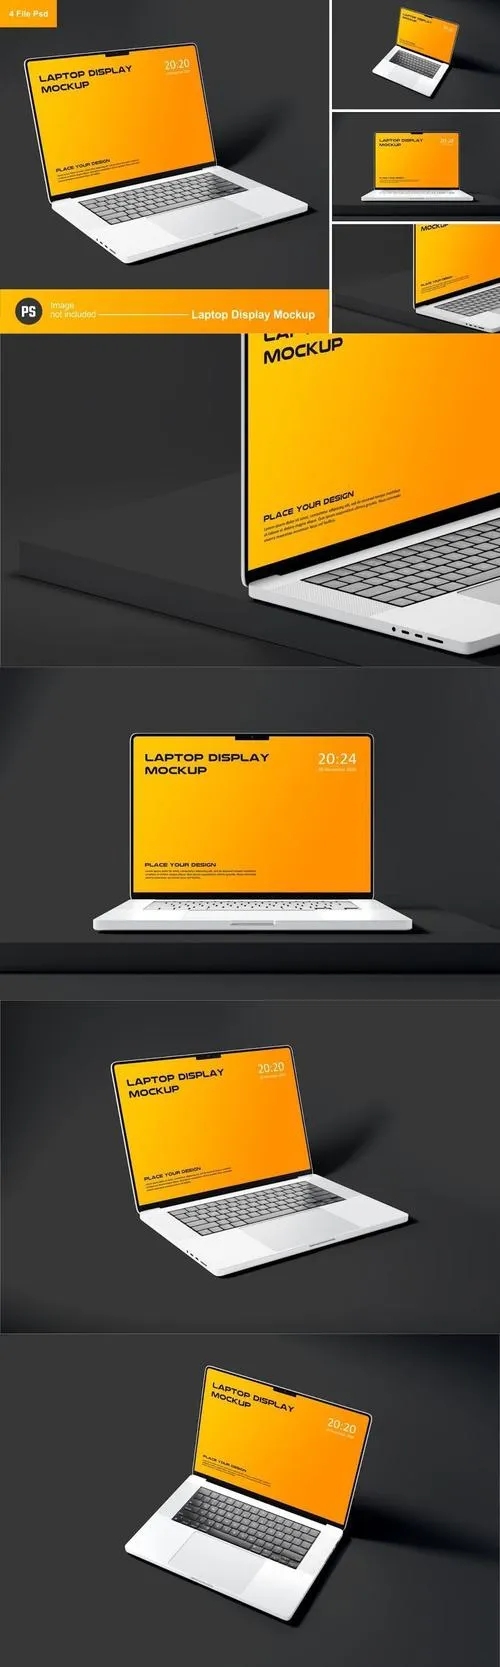 Laptop Display Mockup